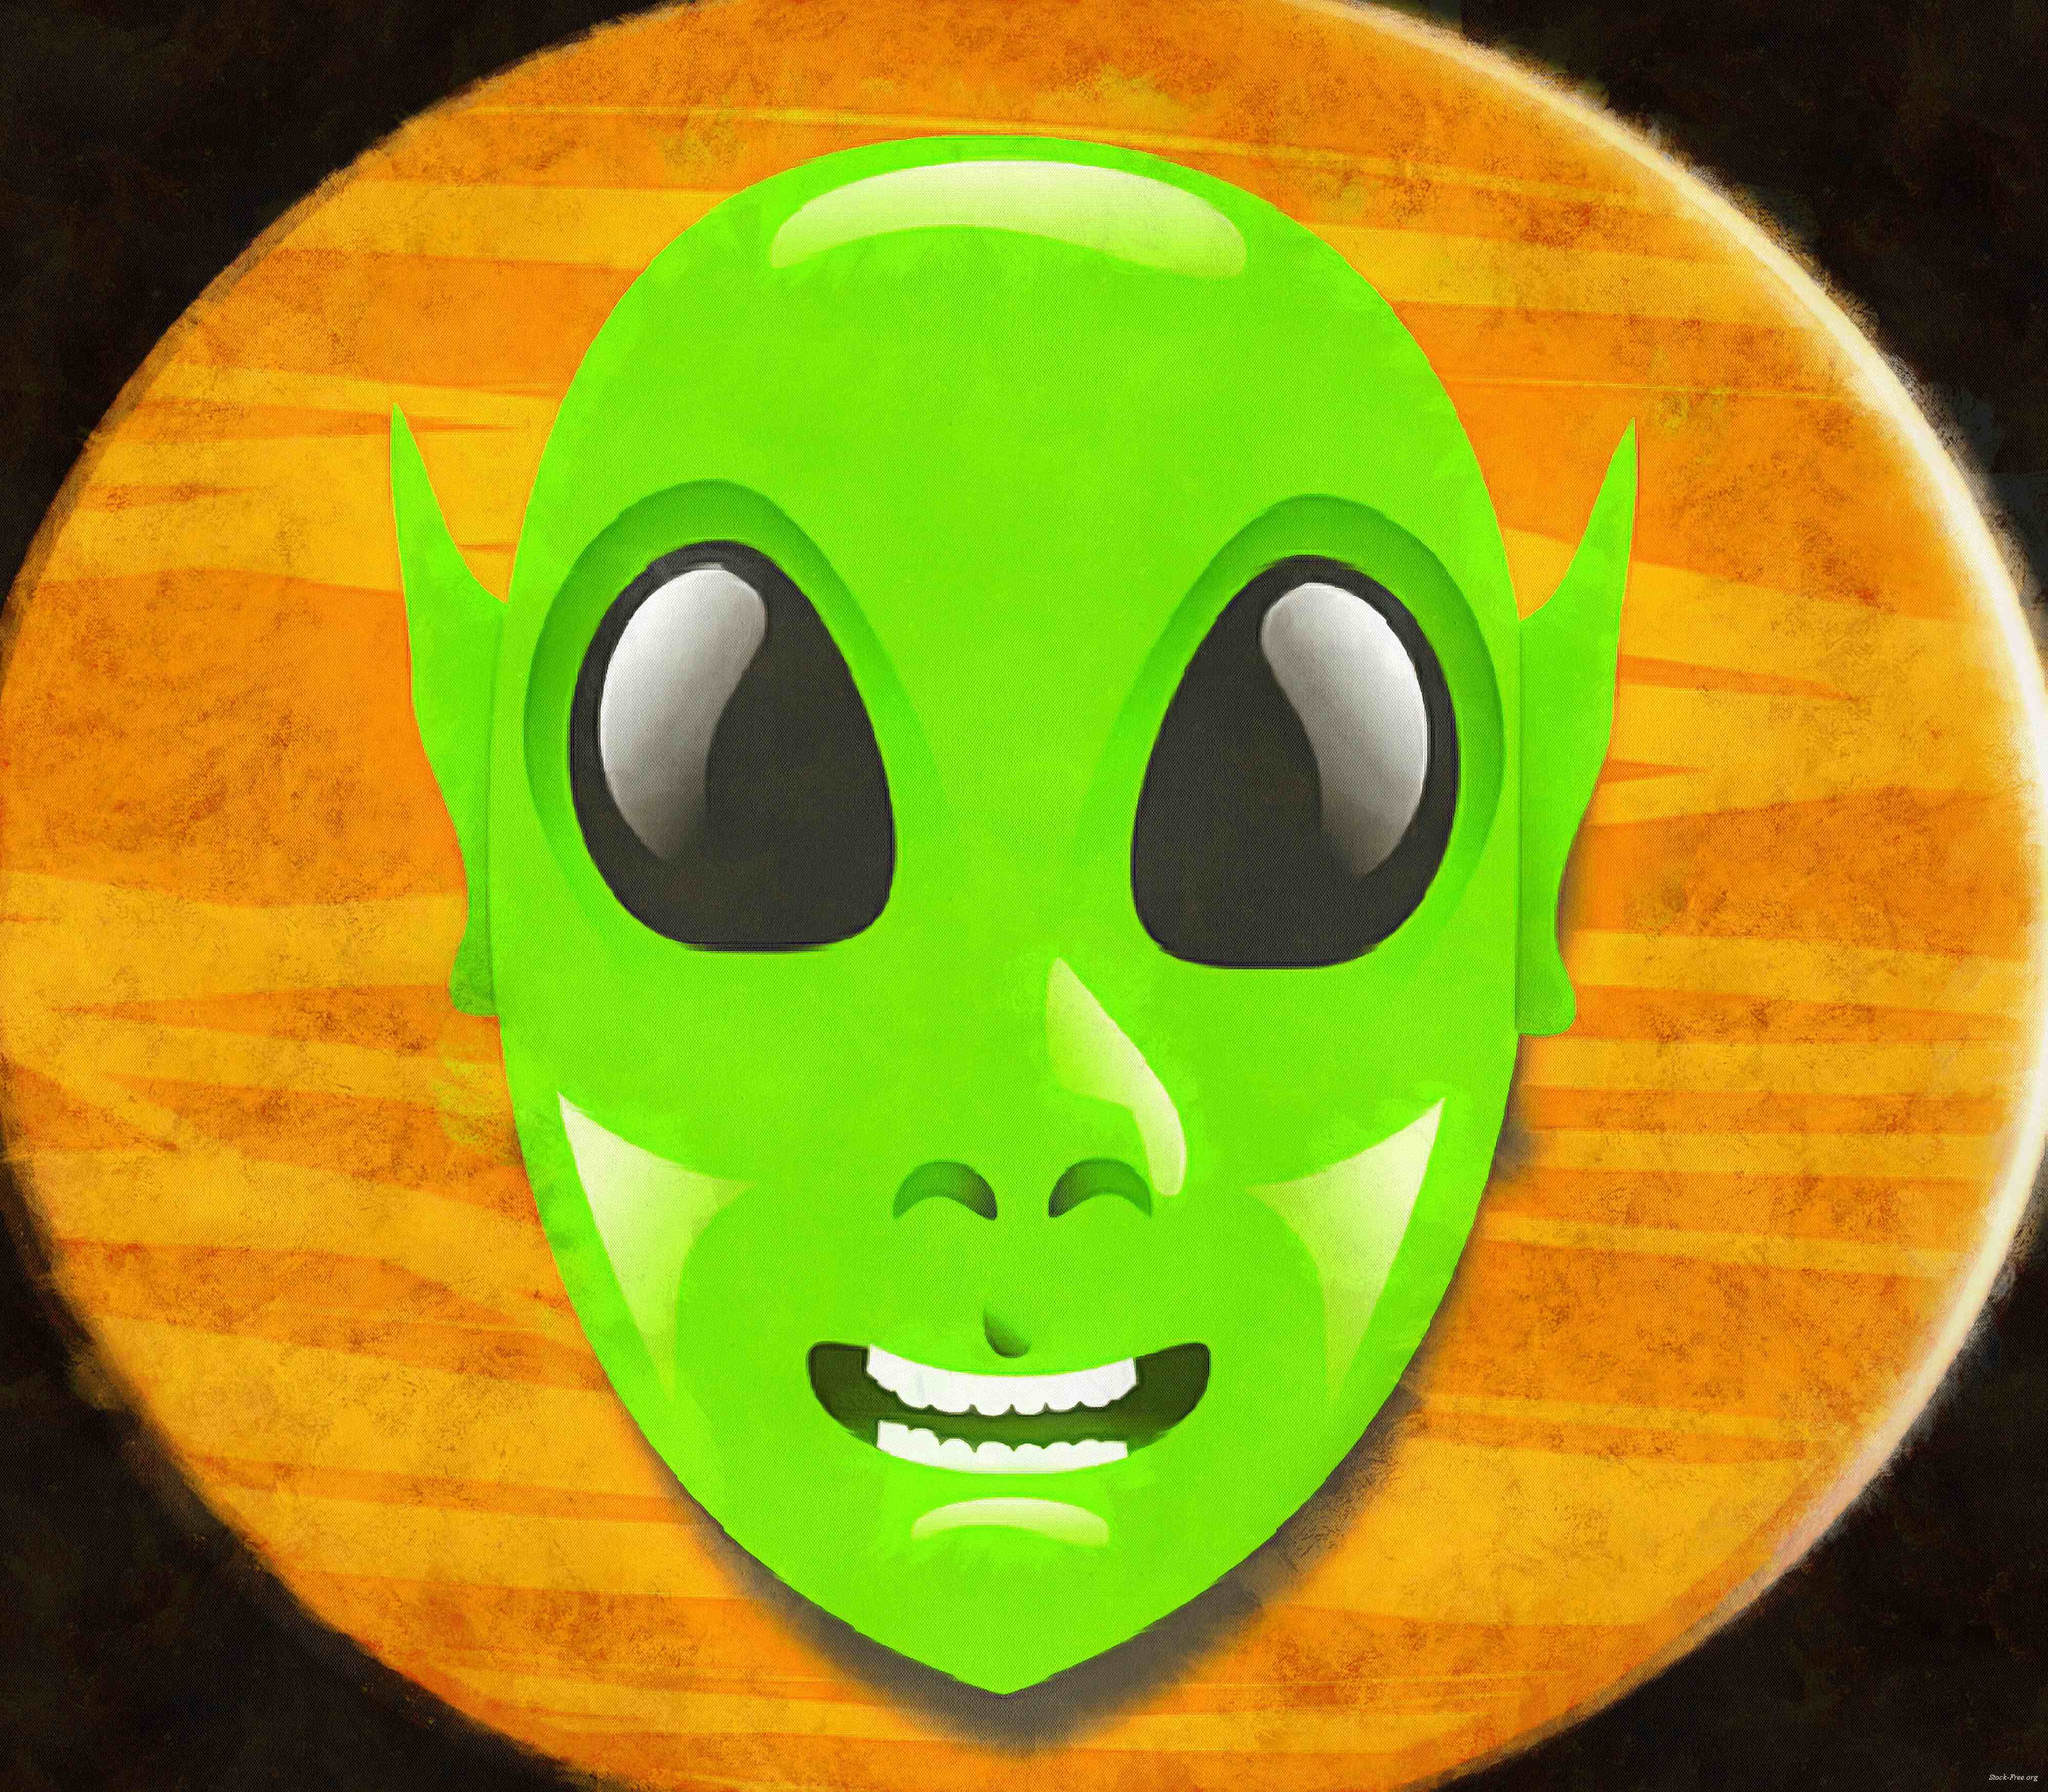 alien, green, green, man, alien, mask, halloween - halloween free image, free images, public domain images, stock free images, download image for free, halloween stock free images!<br>